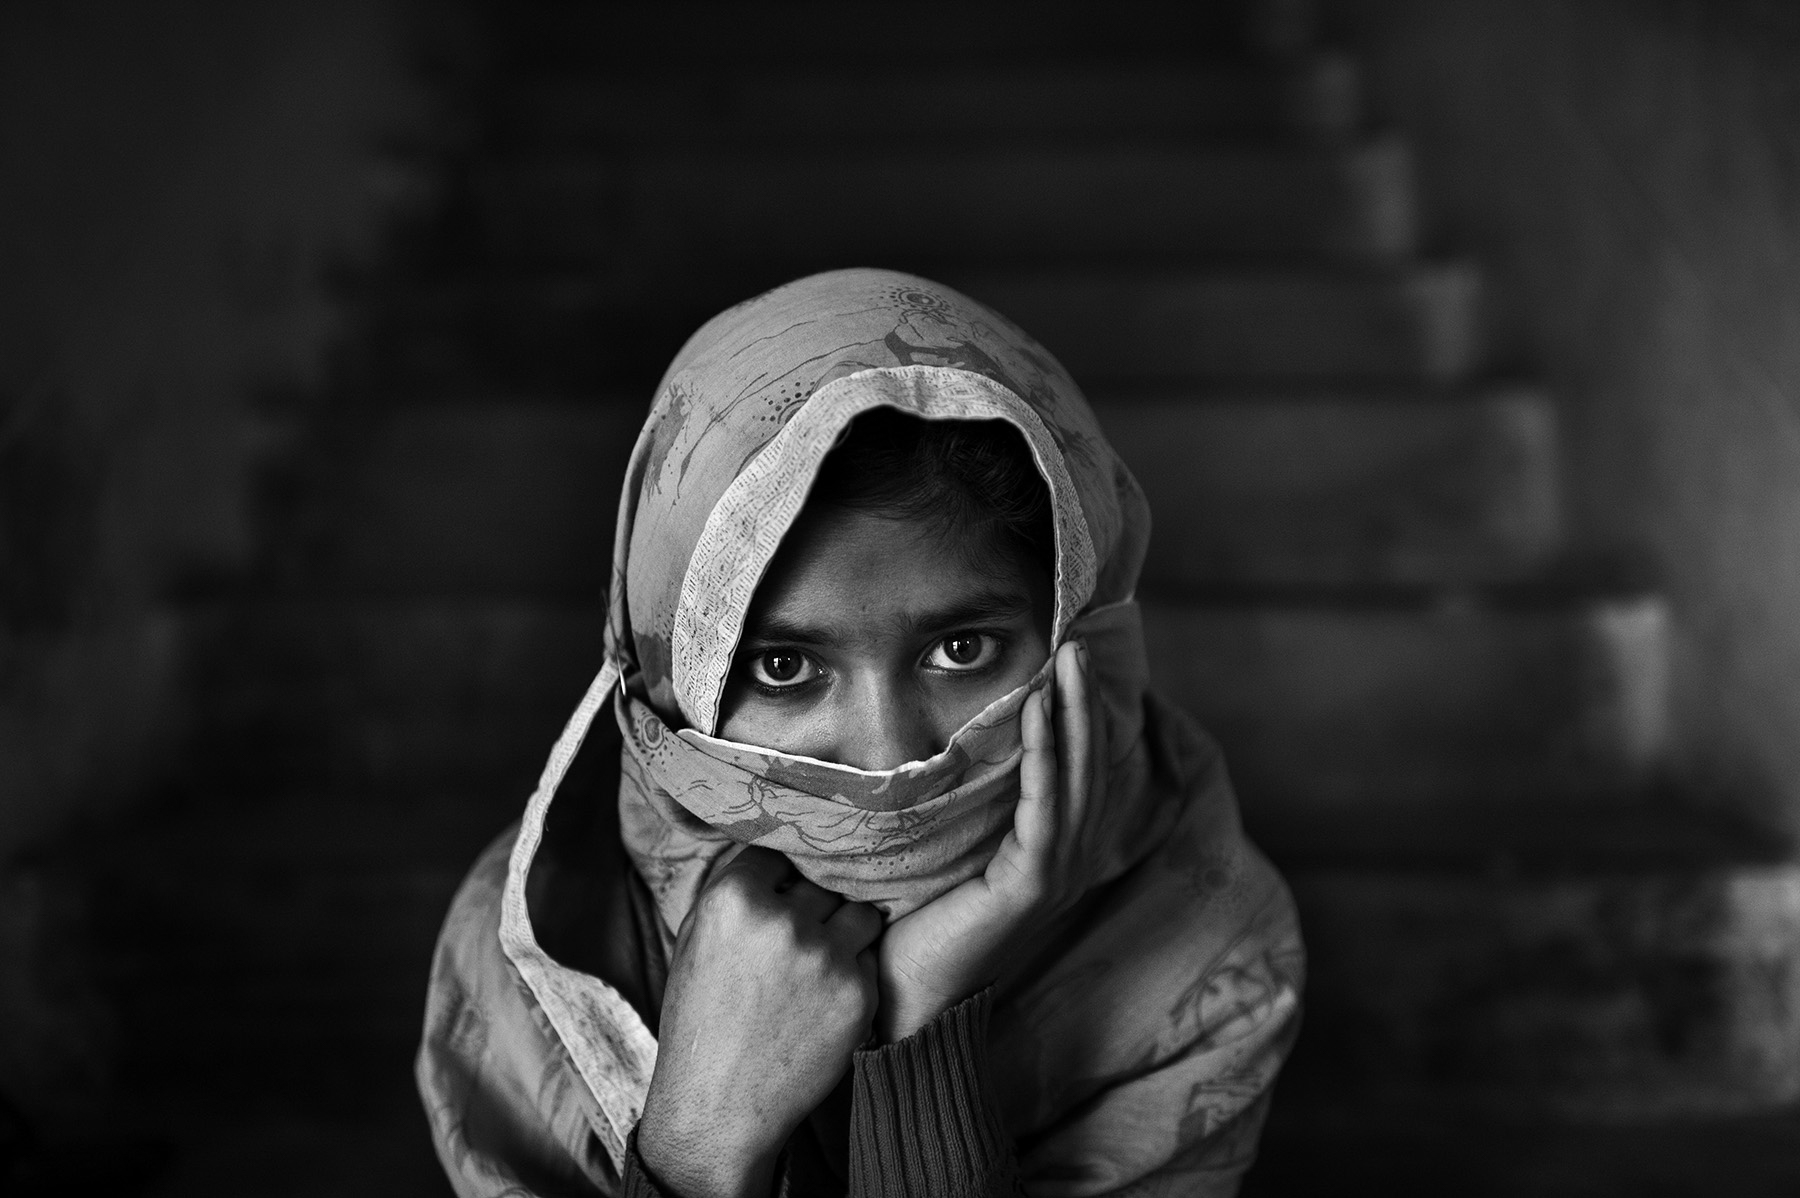 Child Labor and Exploitation in Bangladesh